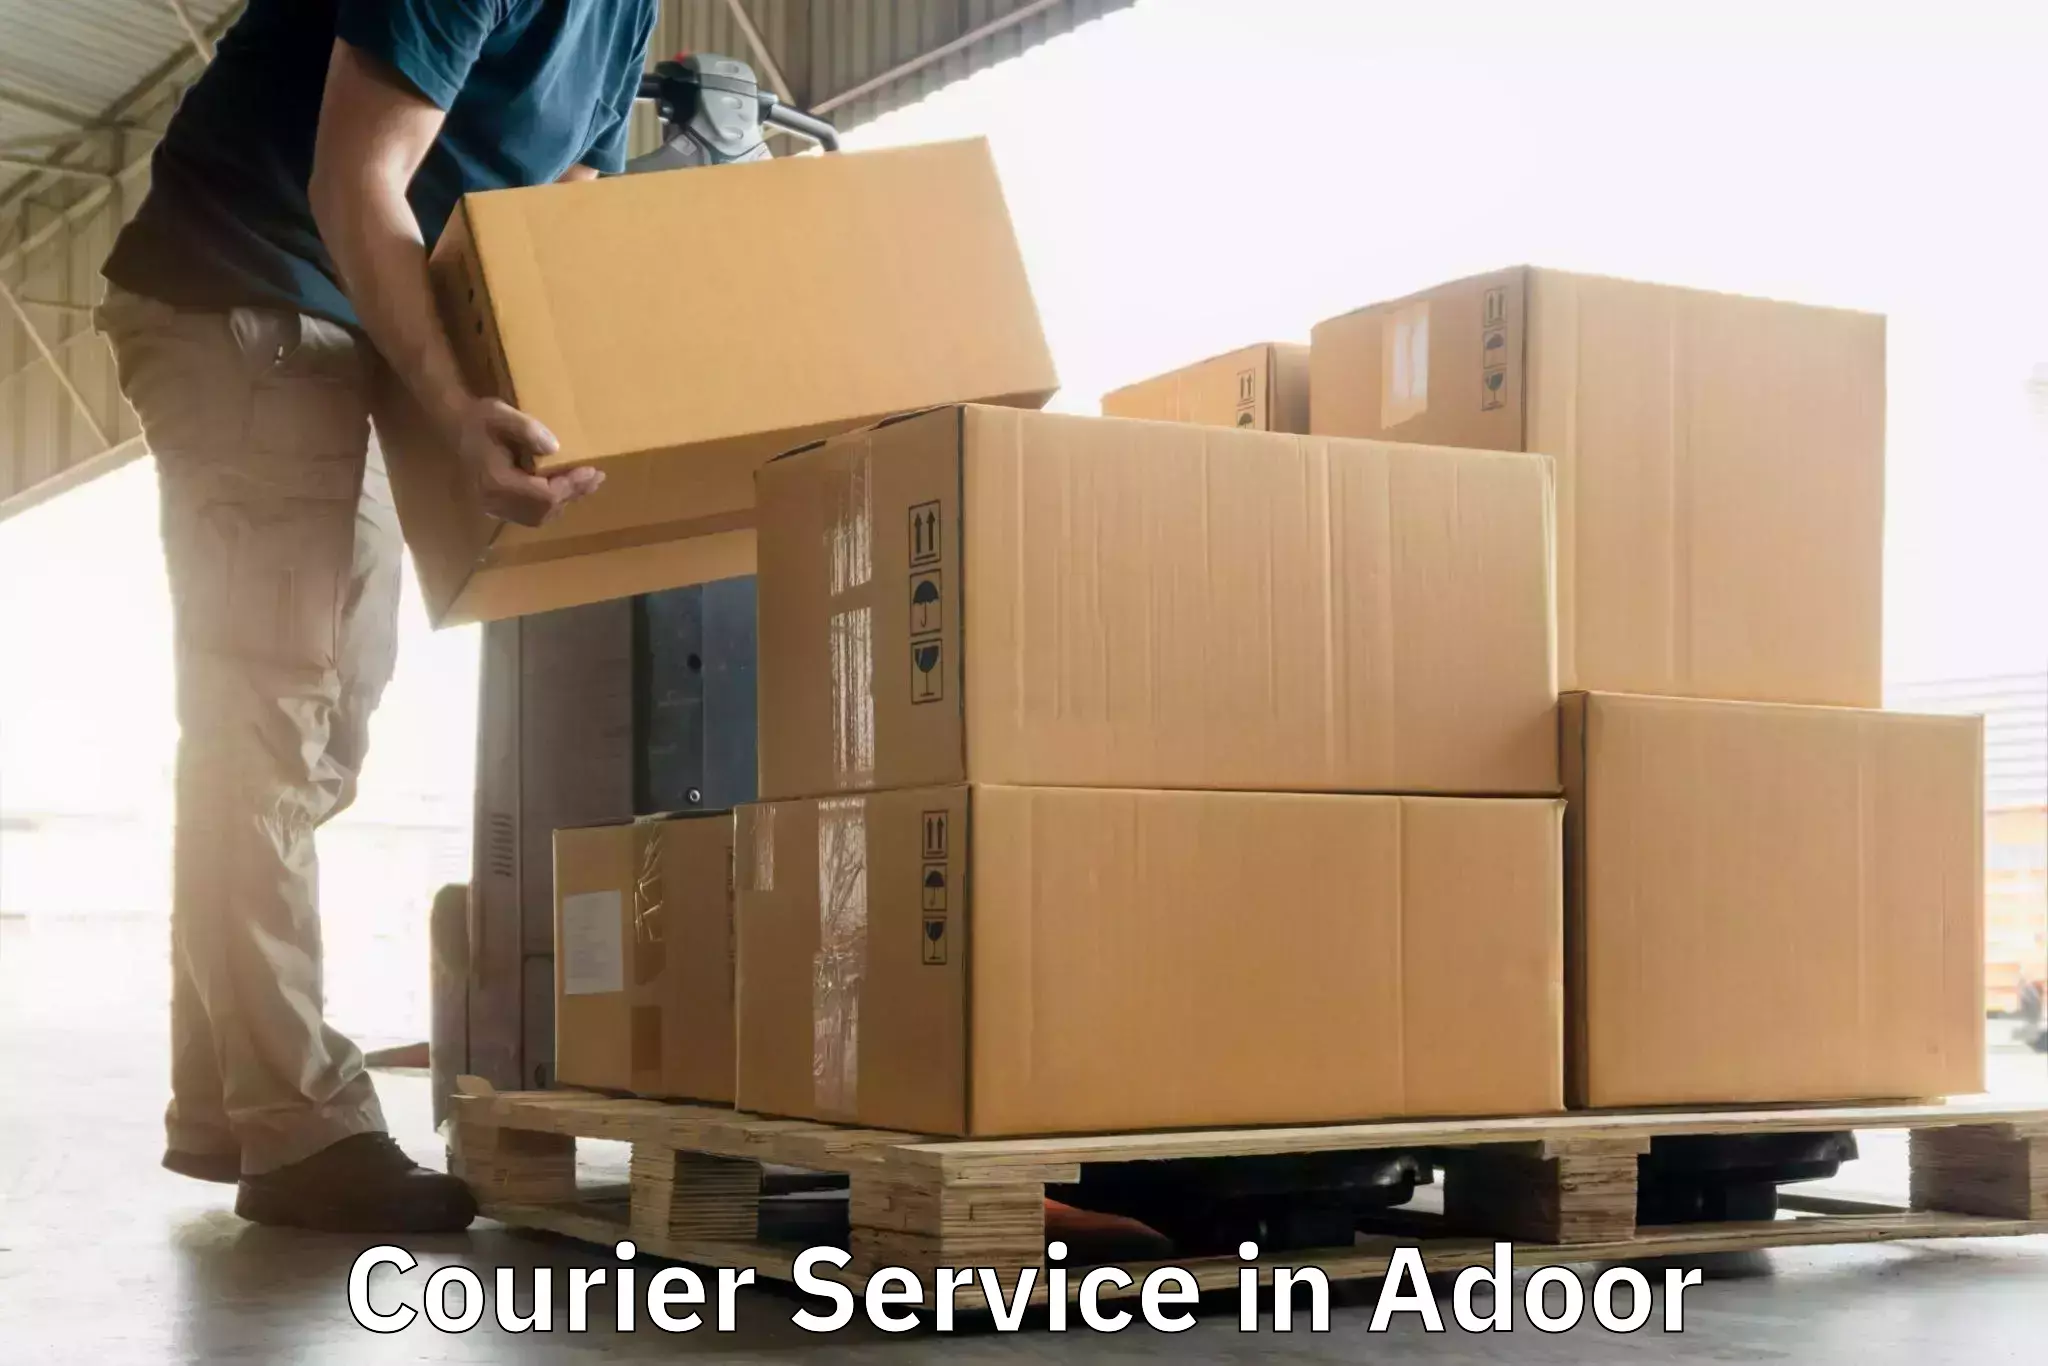 Round-the-clock parcel delivery in Adoor